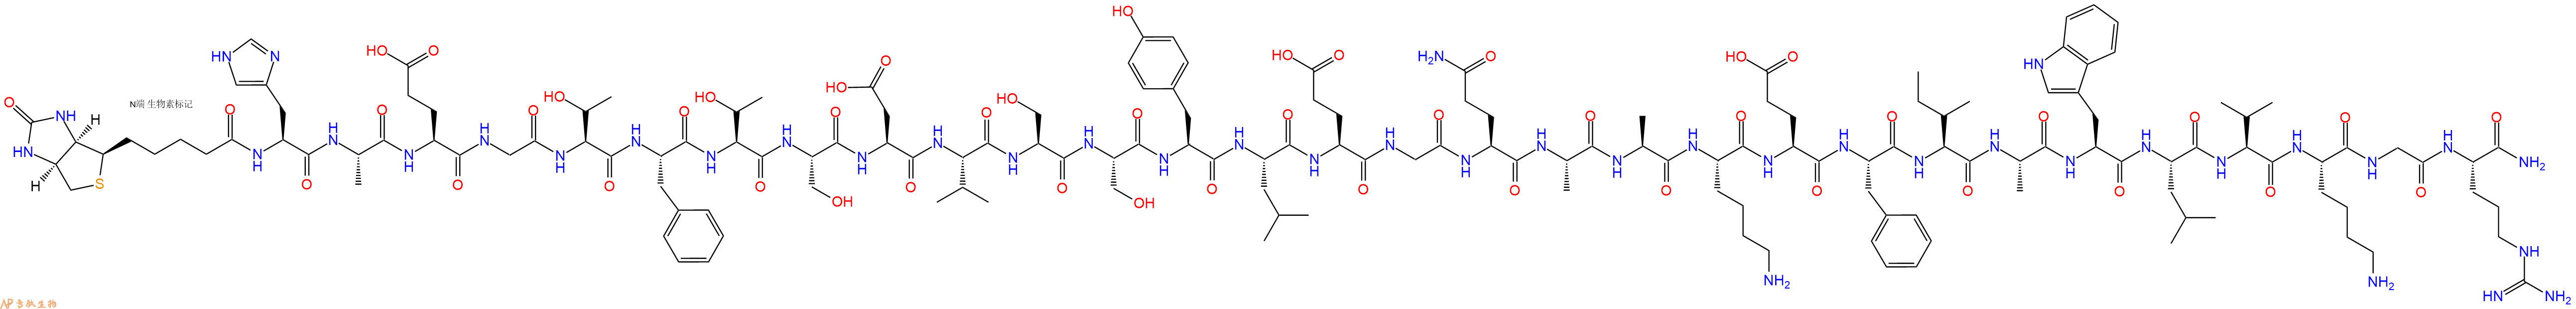 专肽生物产品胰高血糖素样肽Biotin-Glucagon-Like Peptide 1(7-36), amide